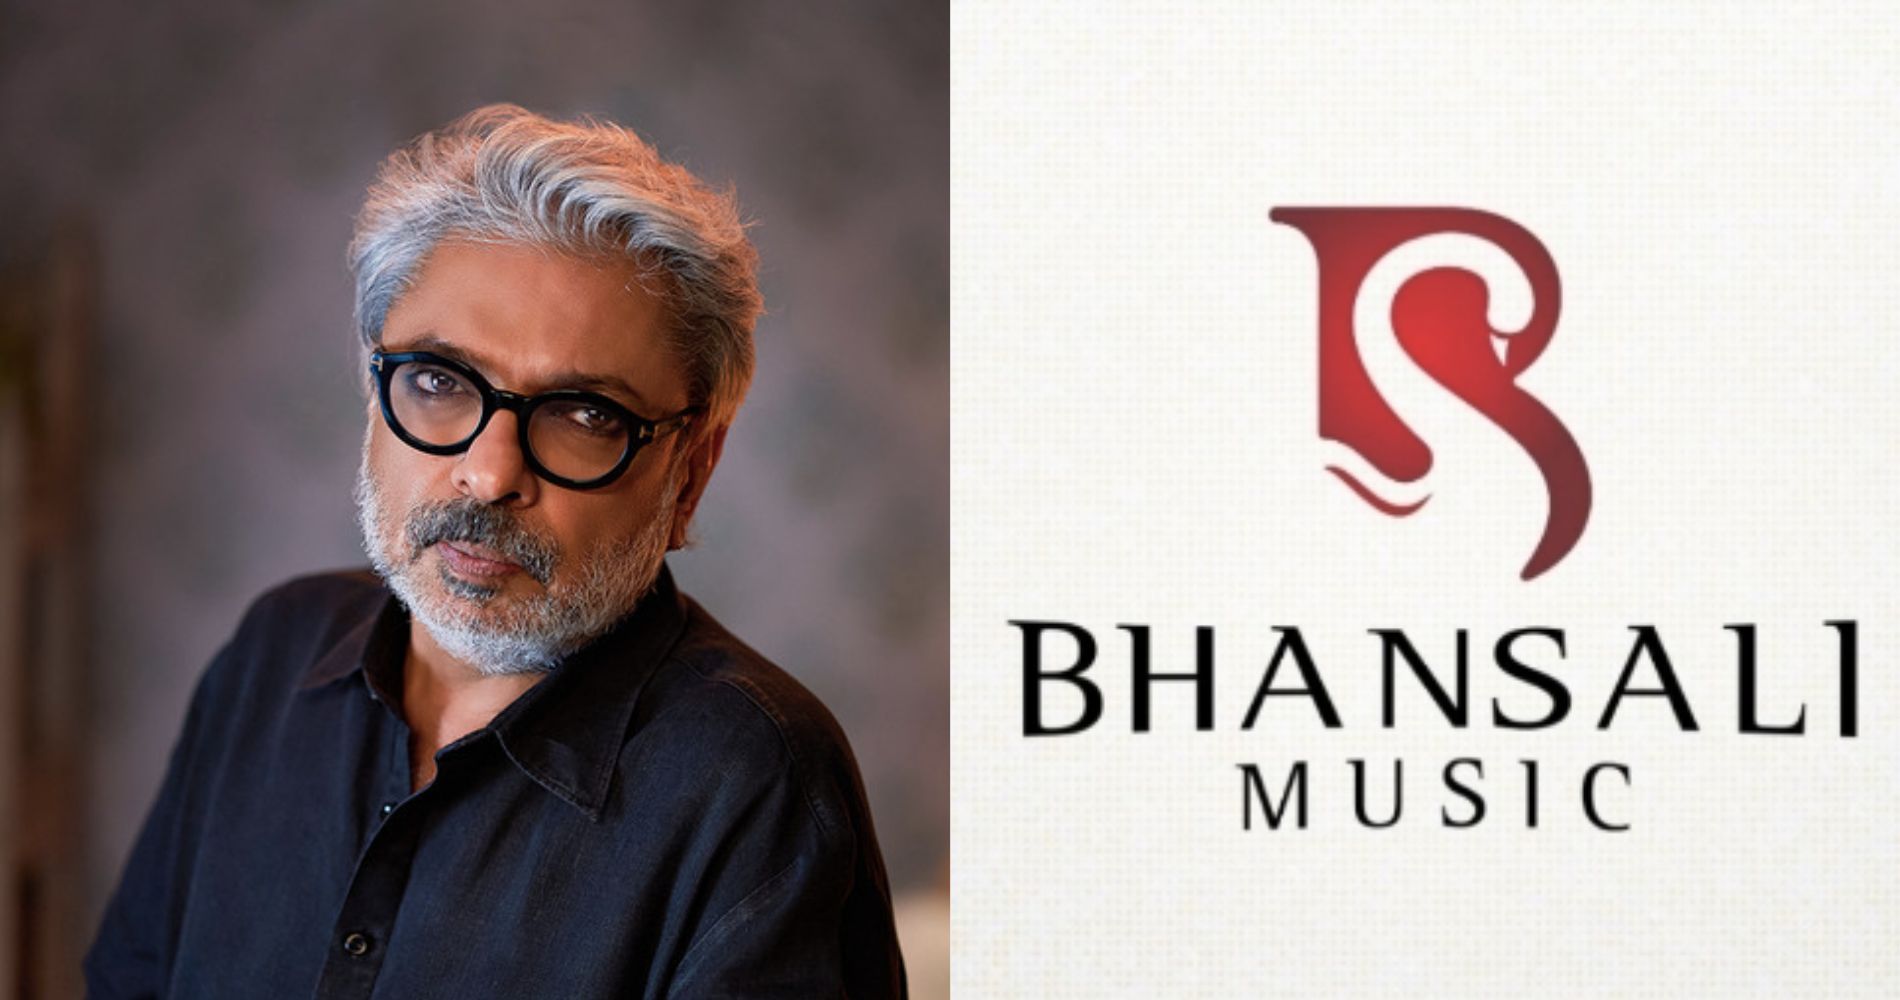 Maestro Filmmaker Sanjay Leela Bhansali Launches His Own Music Channel “Bhansali Music”